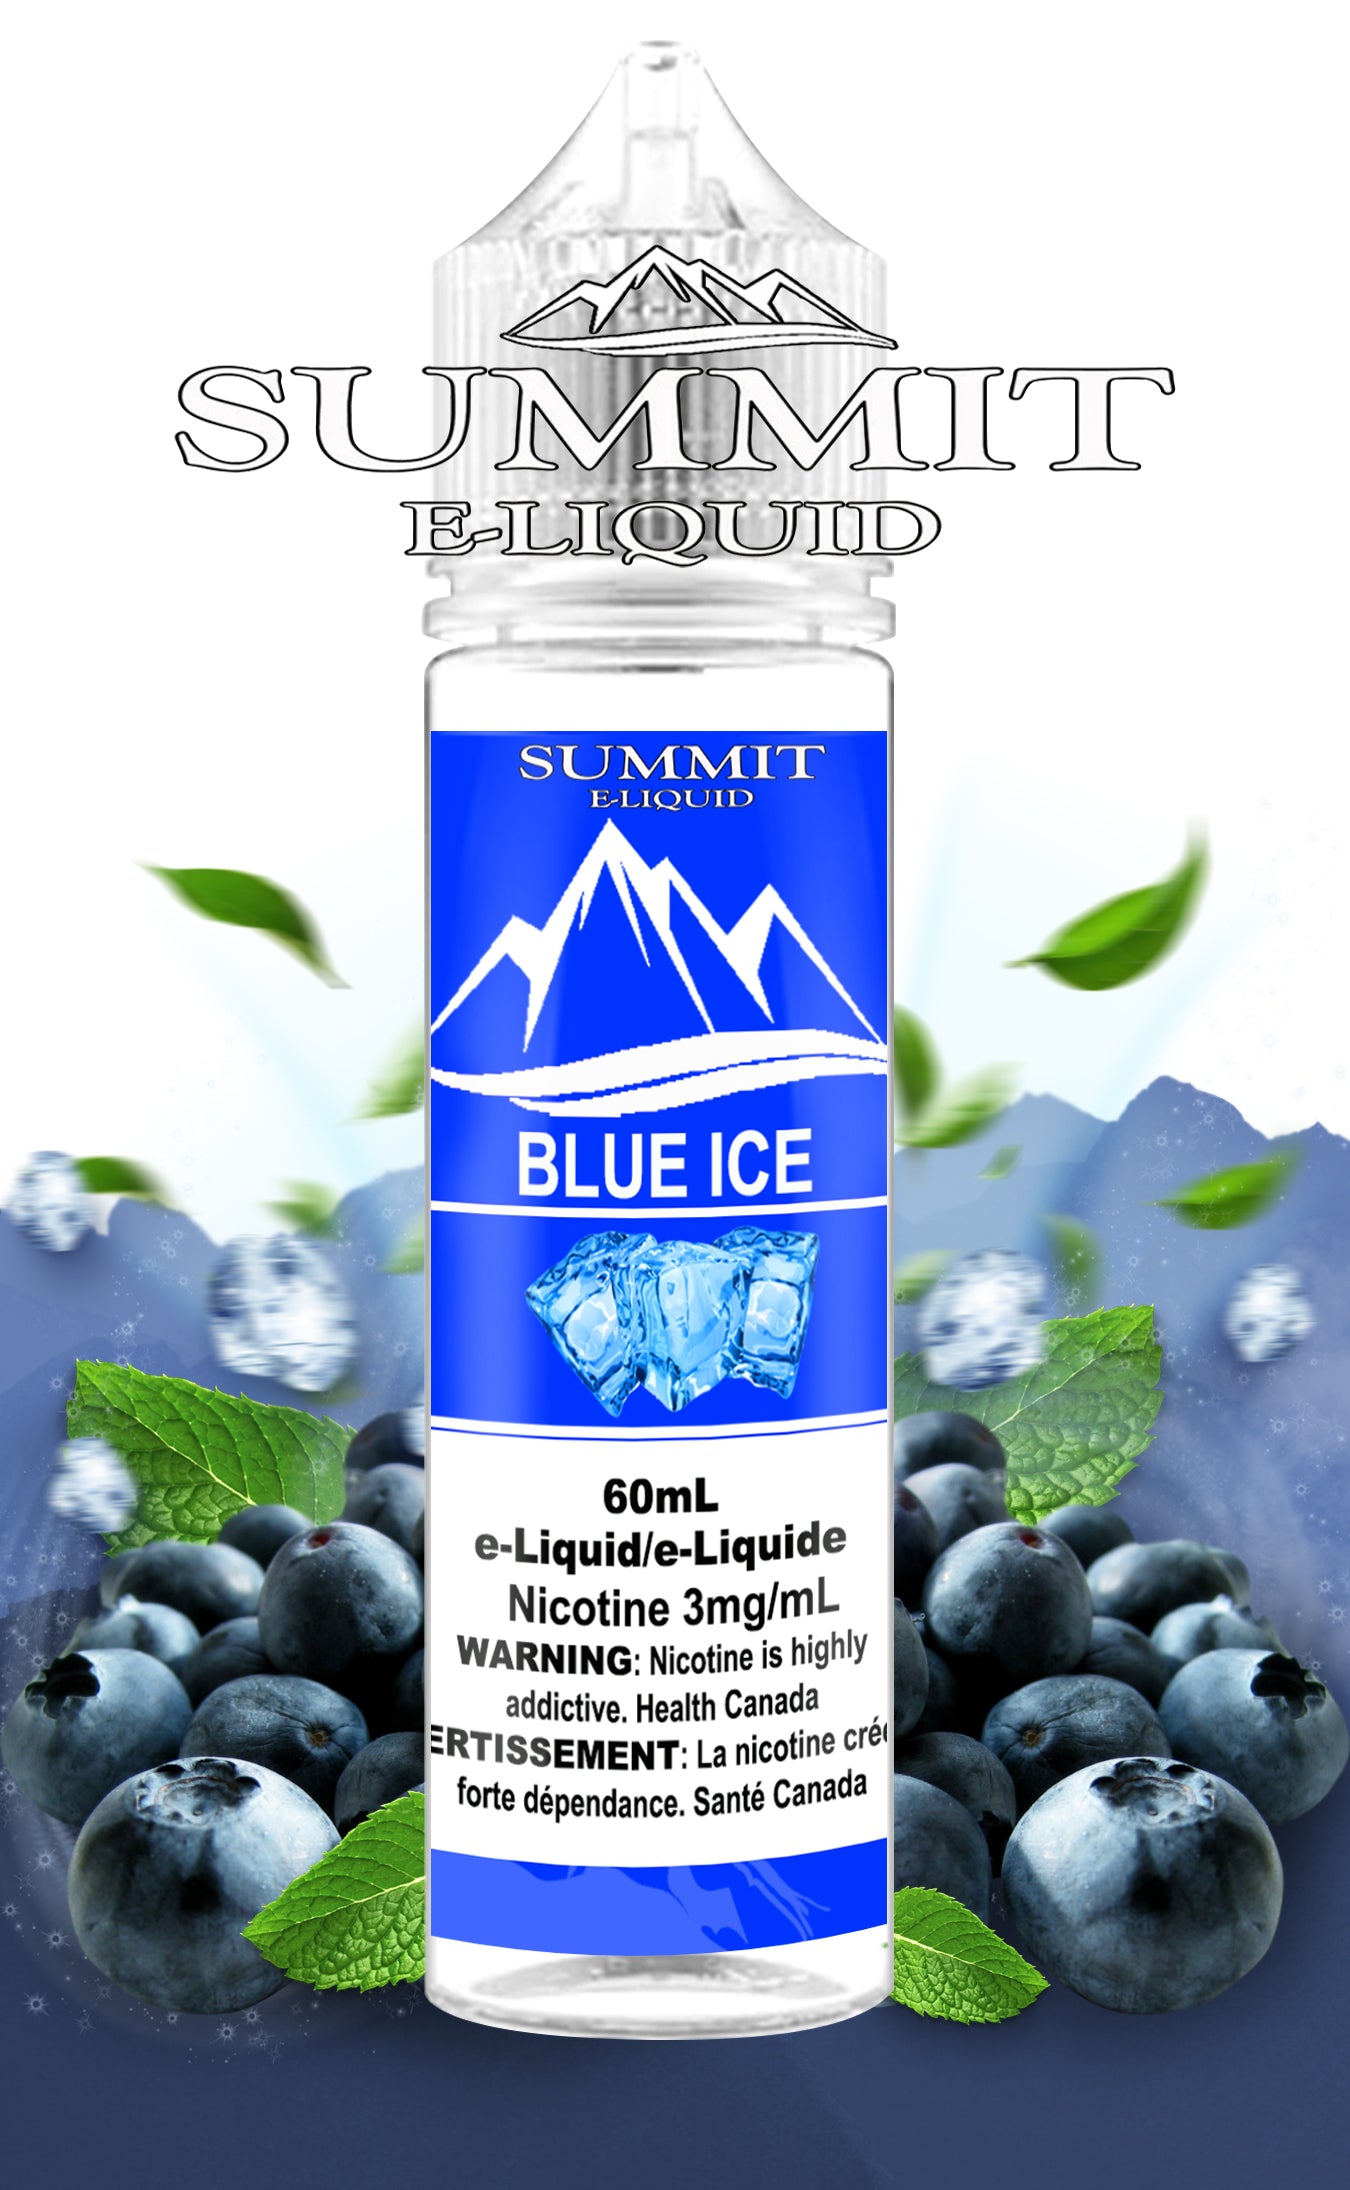 SUMMIT - BLUE ICE